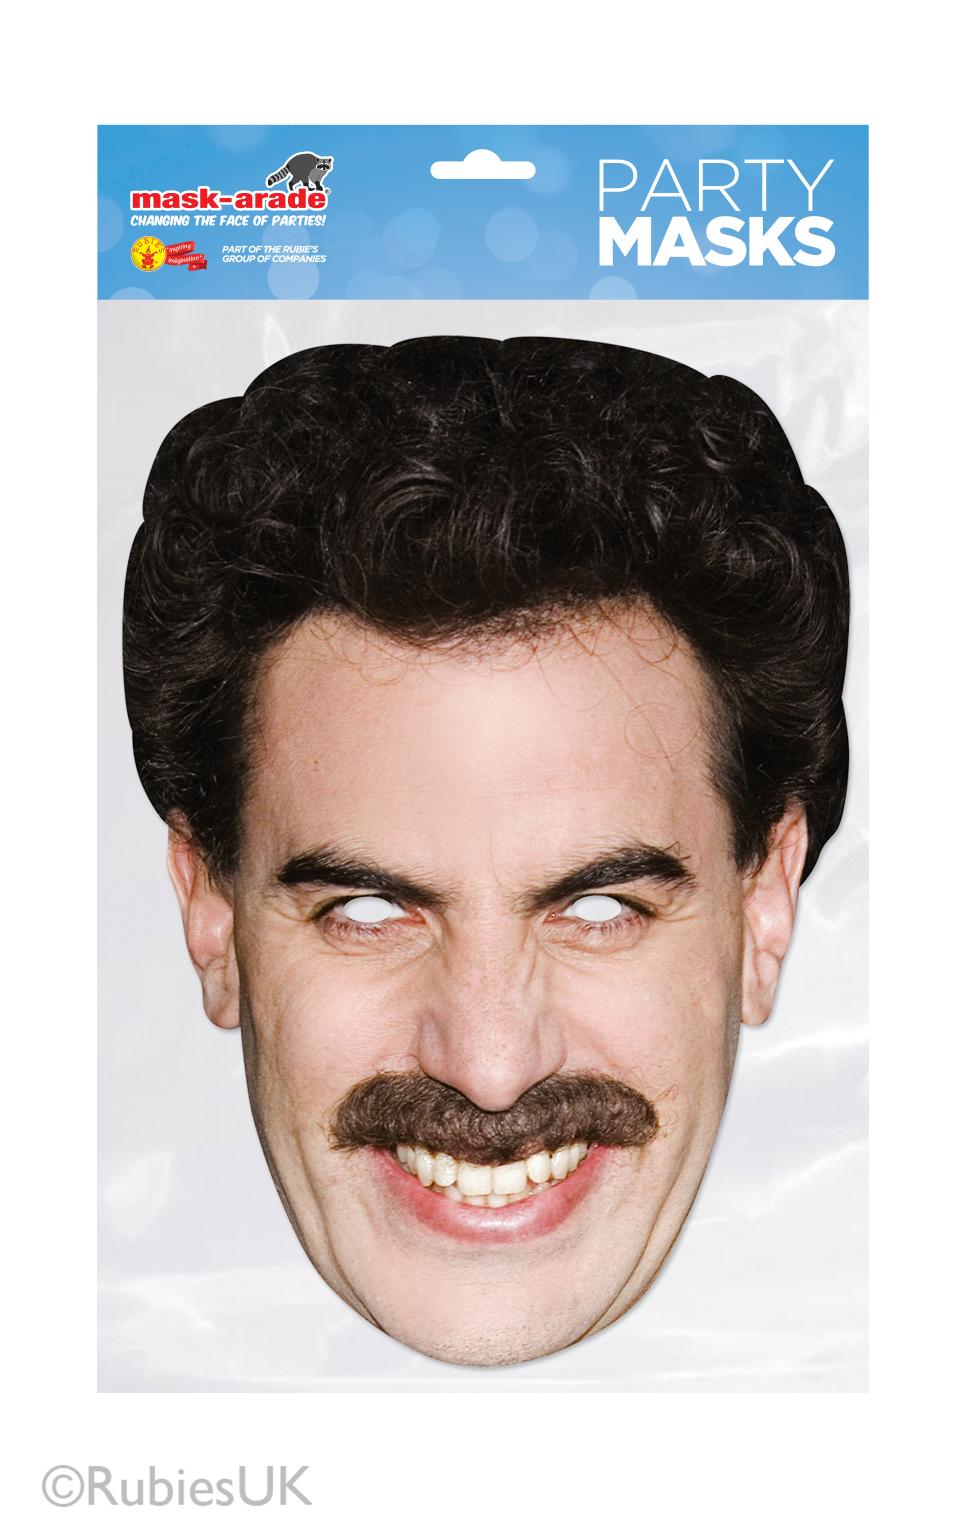 Borat Mask